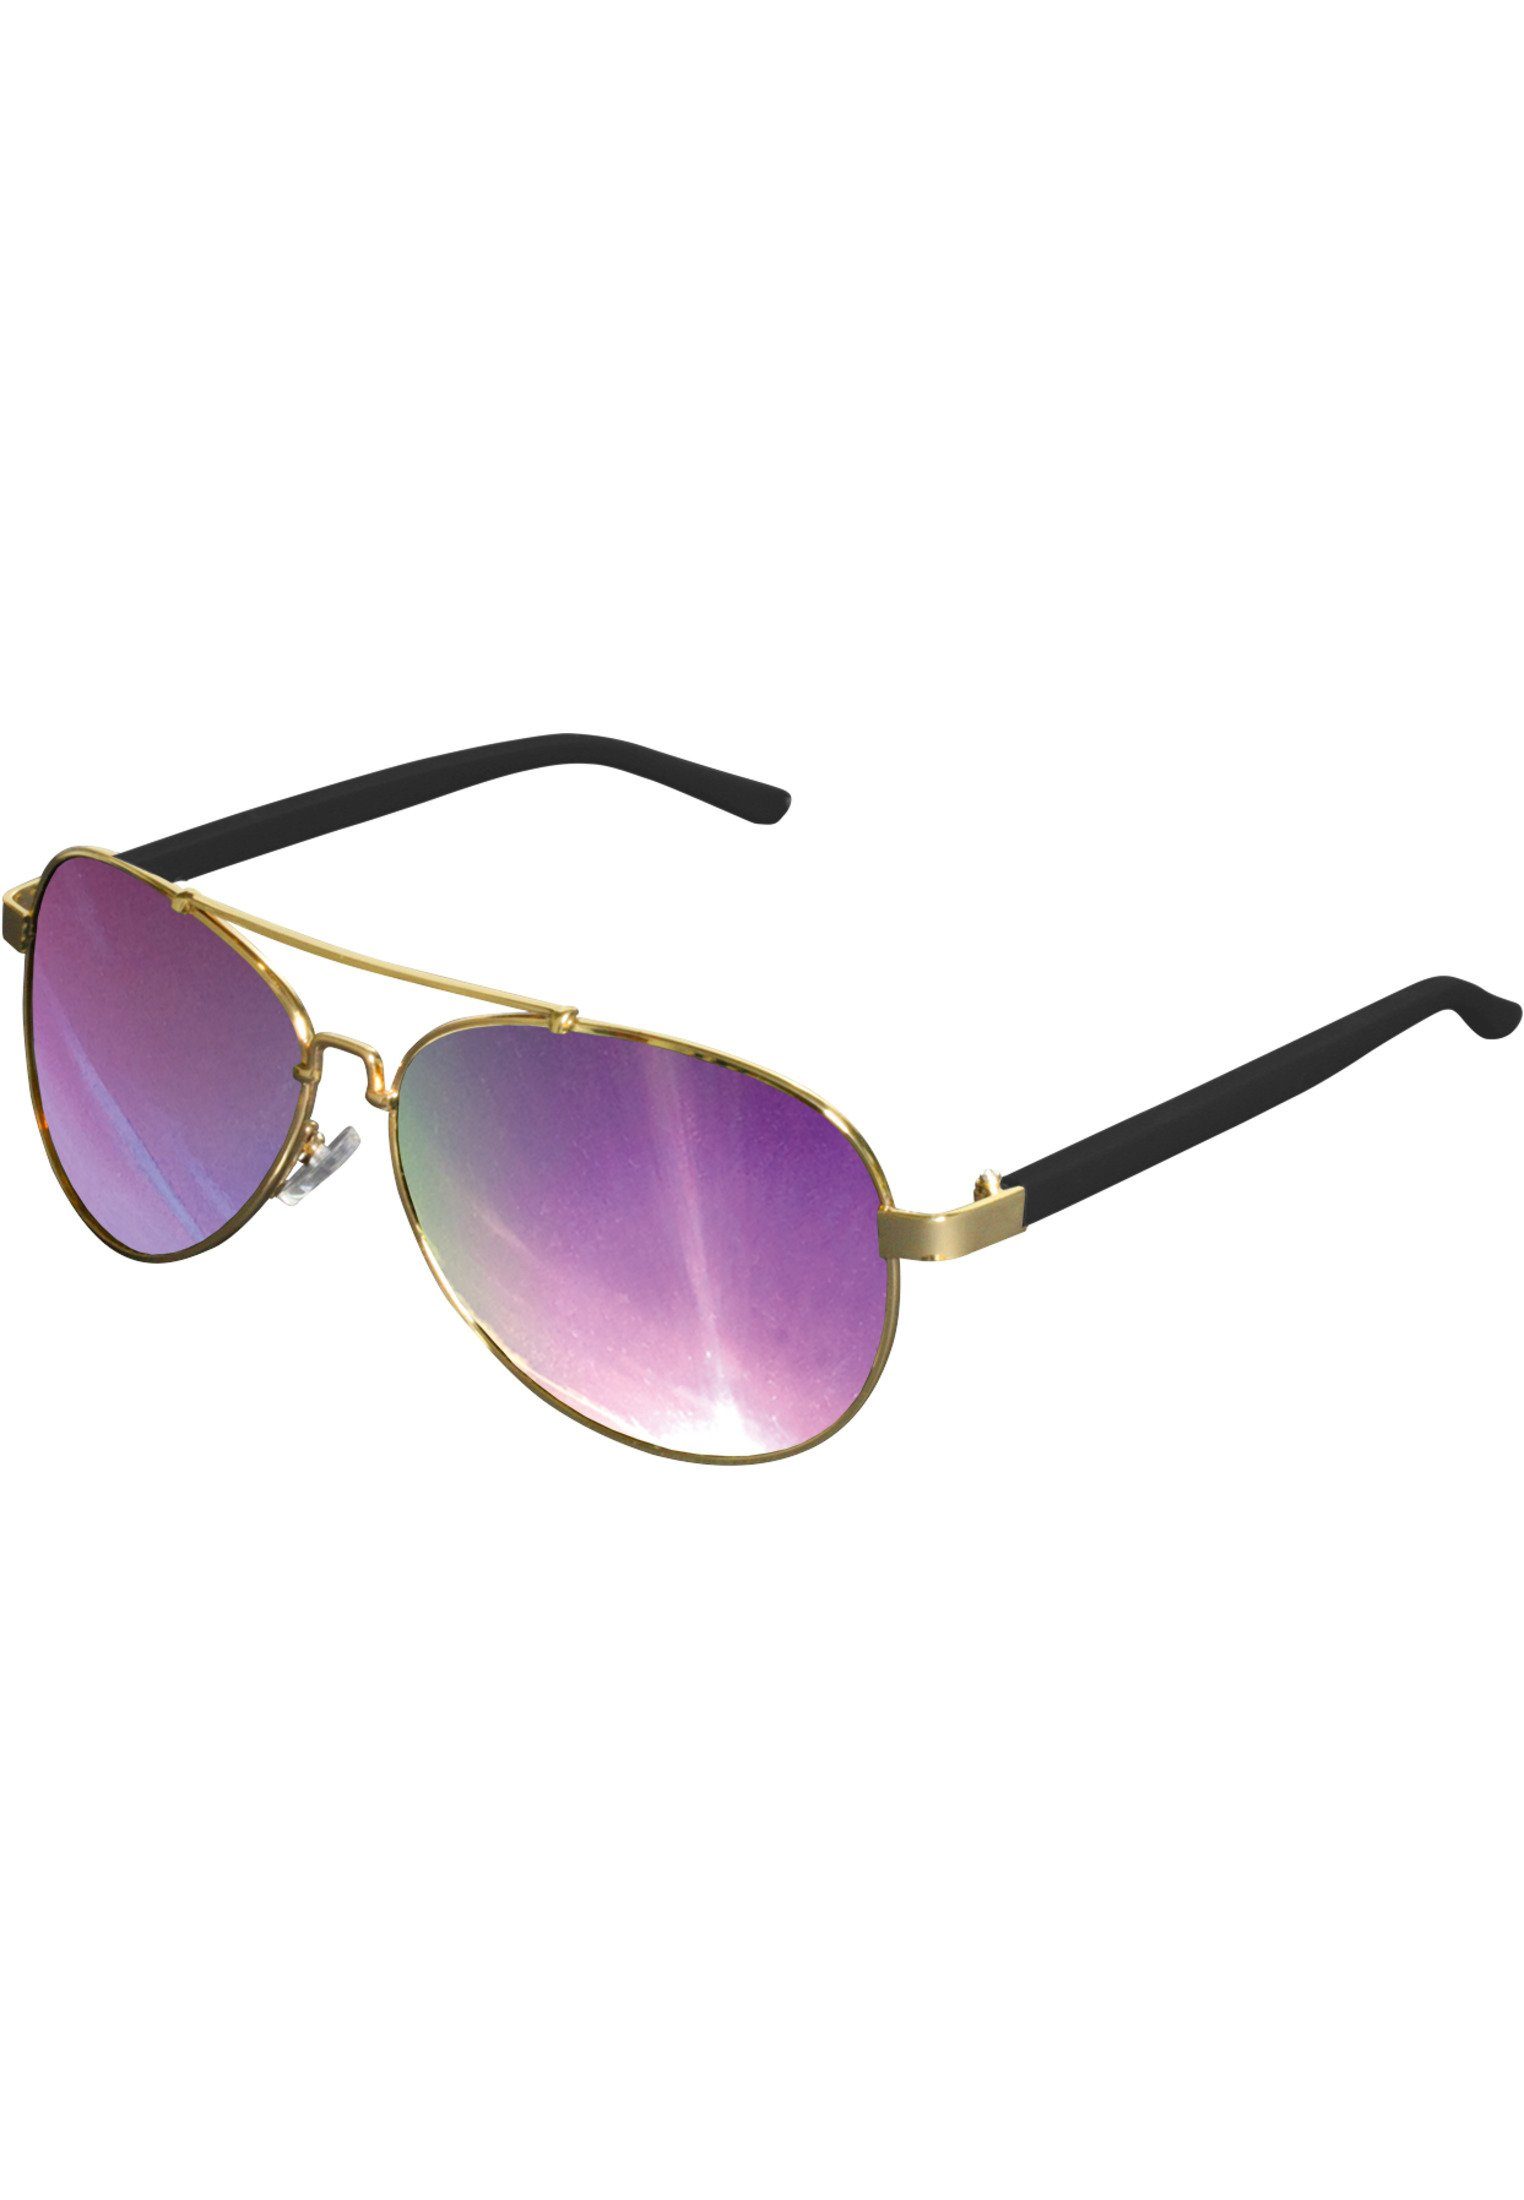 MSTRDS Sonnenbrille Accessoires Sunglasses Mumbo Mirror gold/purple